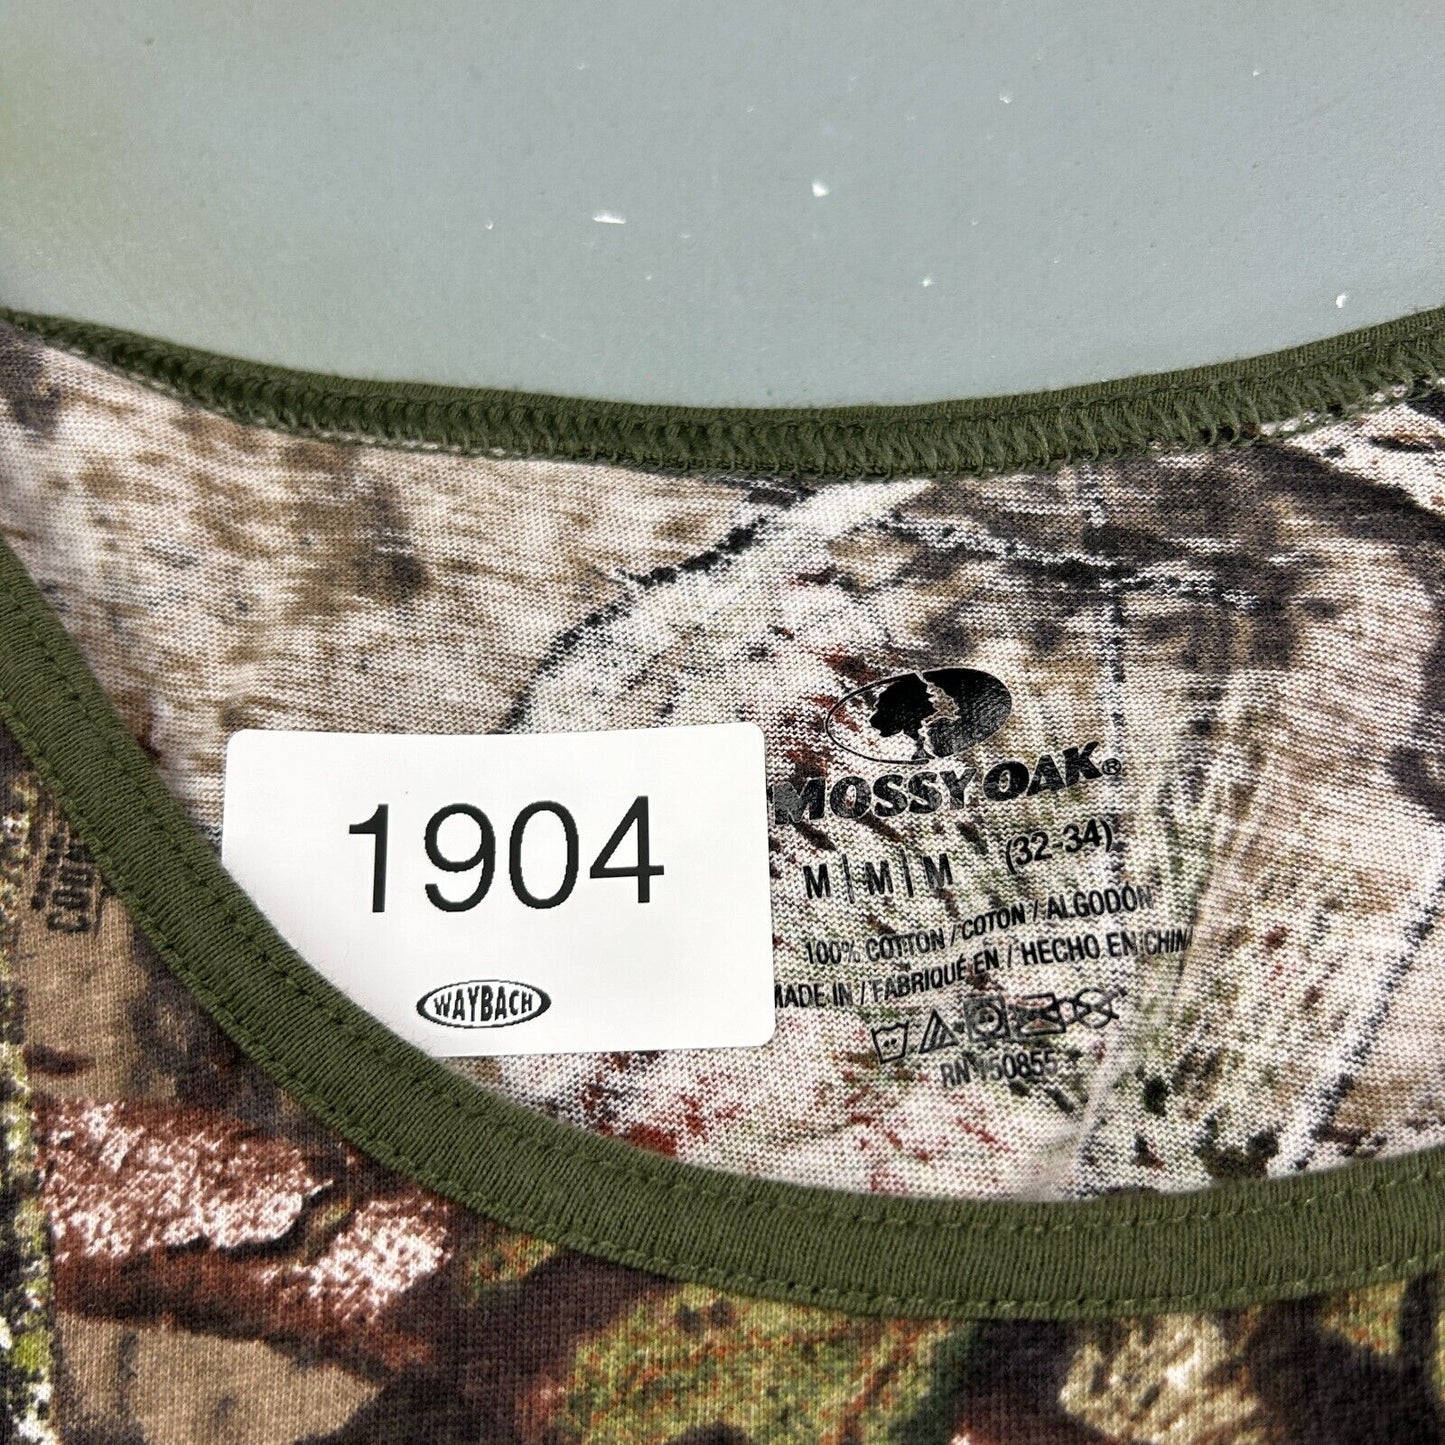 VINTAGE | Mossy Oak Tree Camo Tank Sleeveless T-Shirt sz M Adult